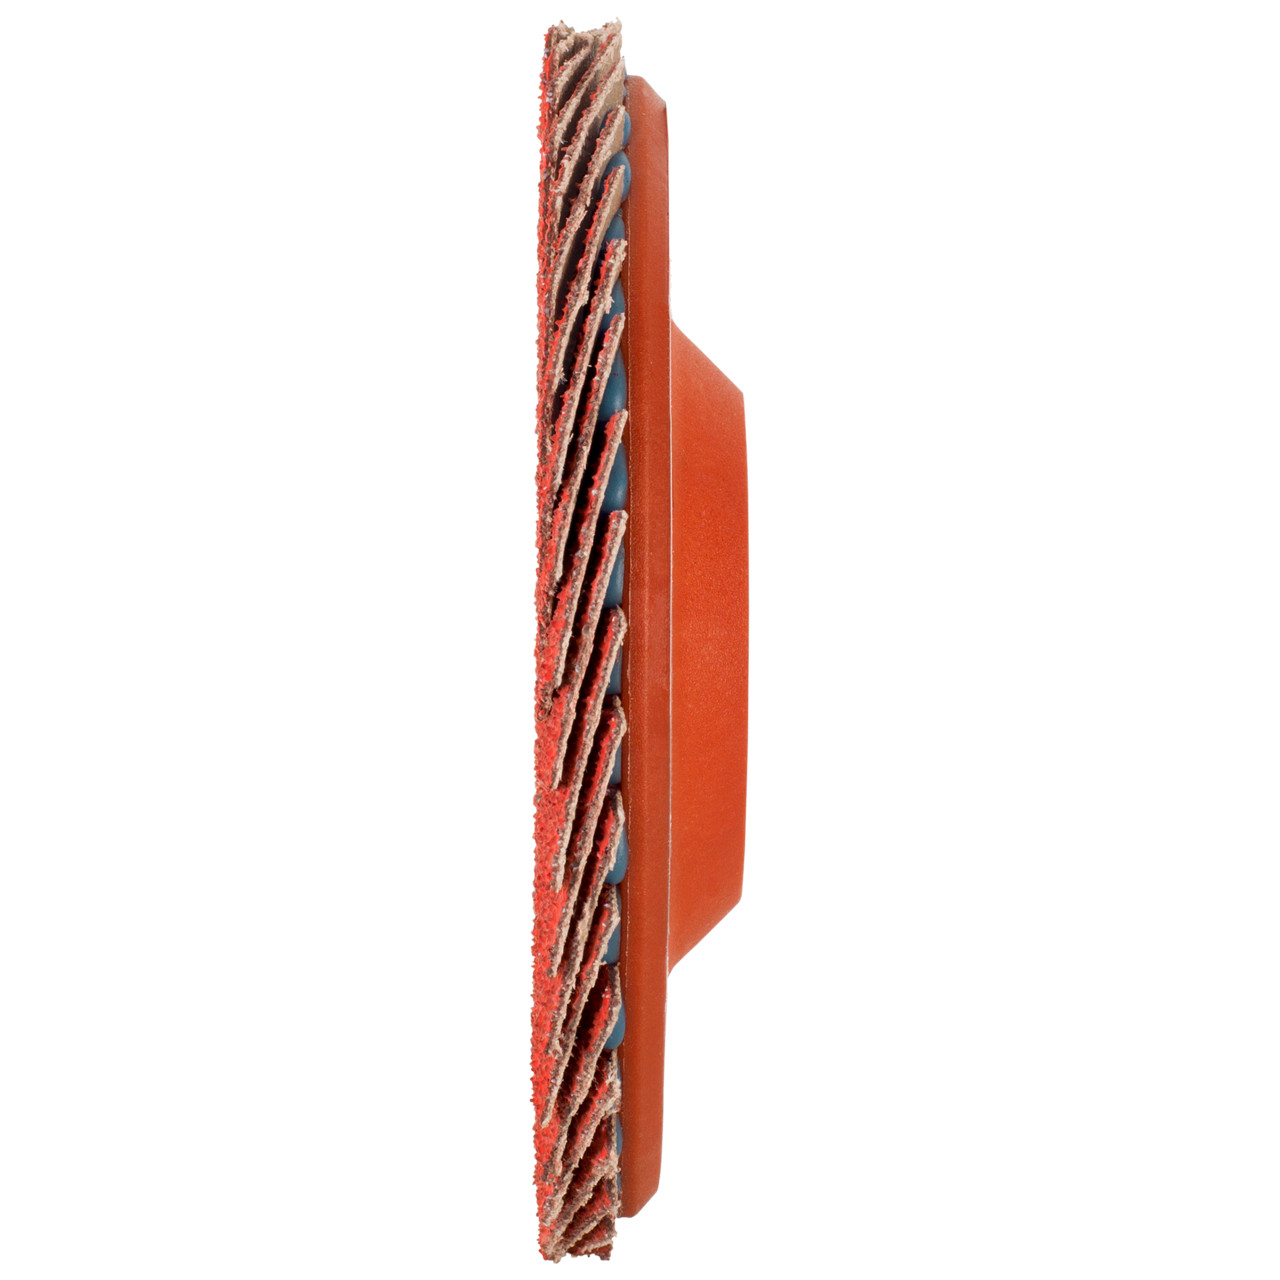 Tyrolit Serrated lock washer DxH 125x22.23 CERAMIC for stainless steel, P60, shape: 28N - straight version (plastic carrier body), Art. 719847